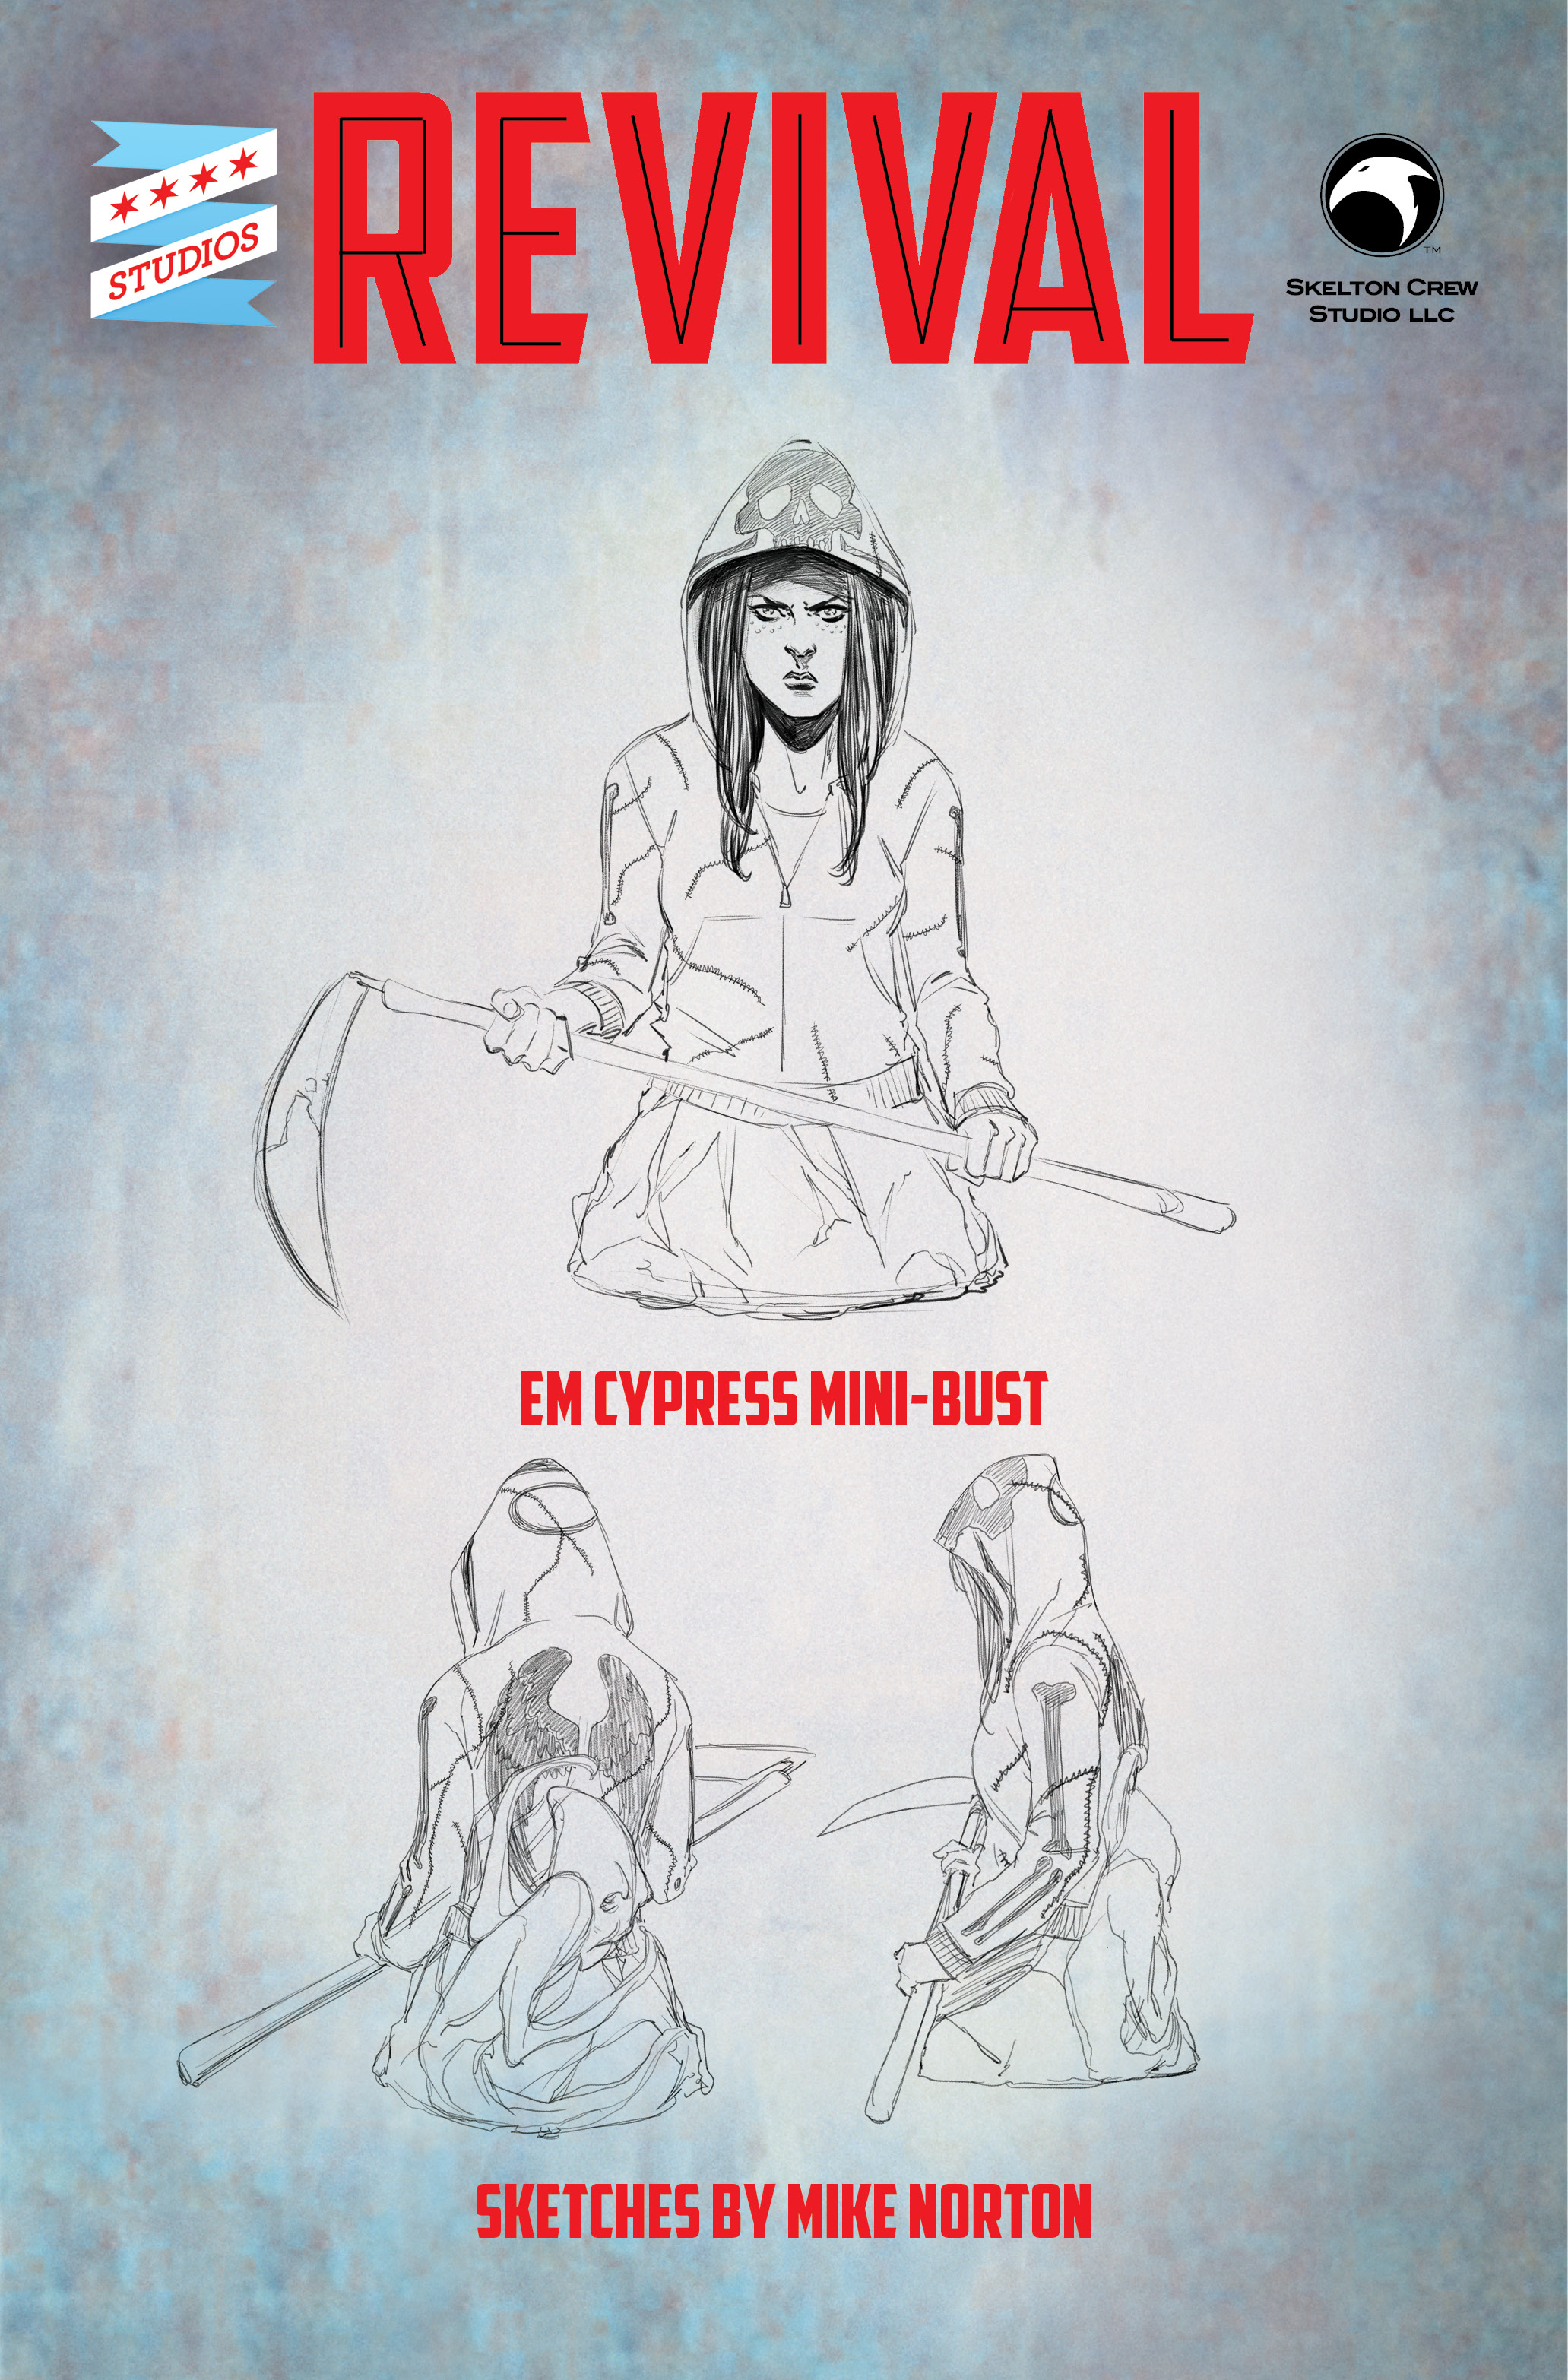 Revival Em Cypress for press release2063 x 3131